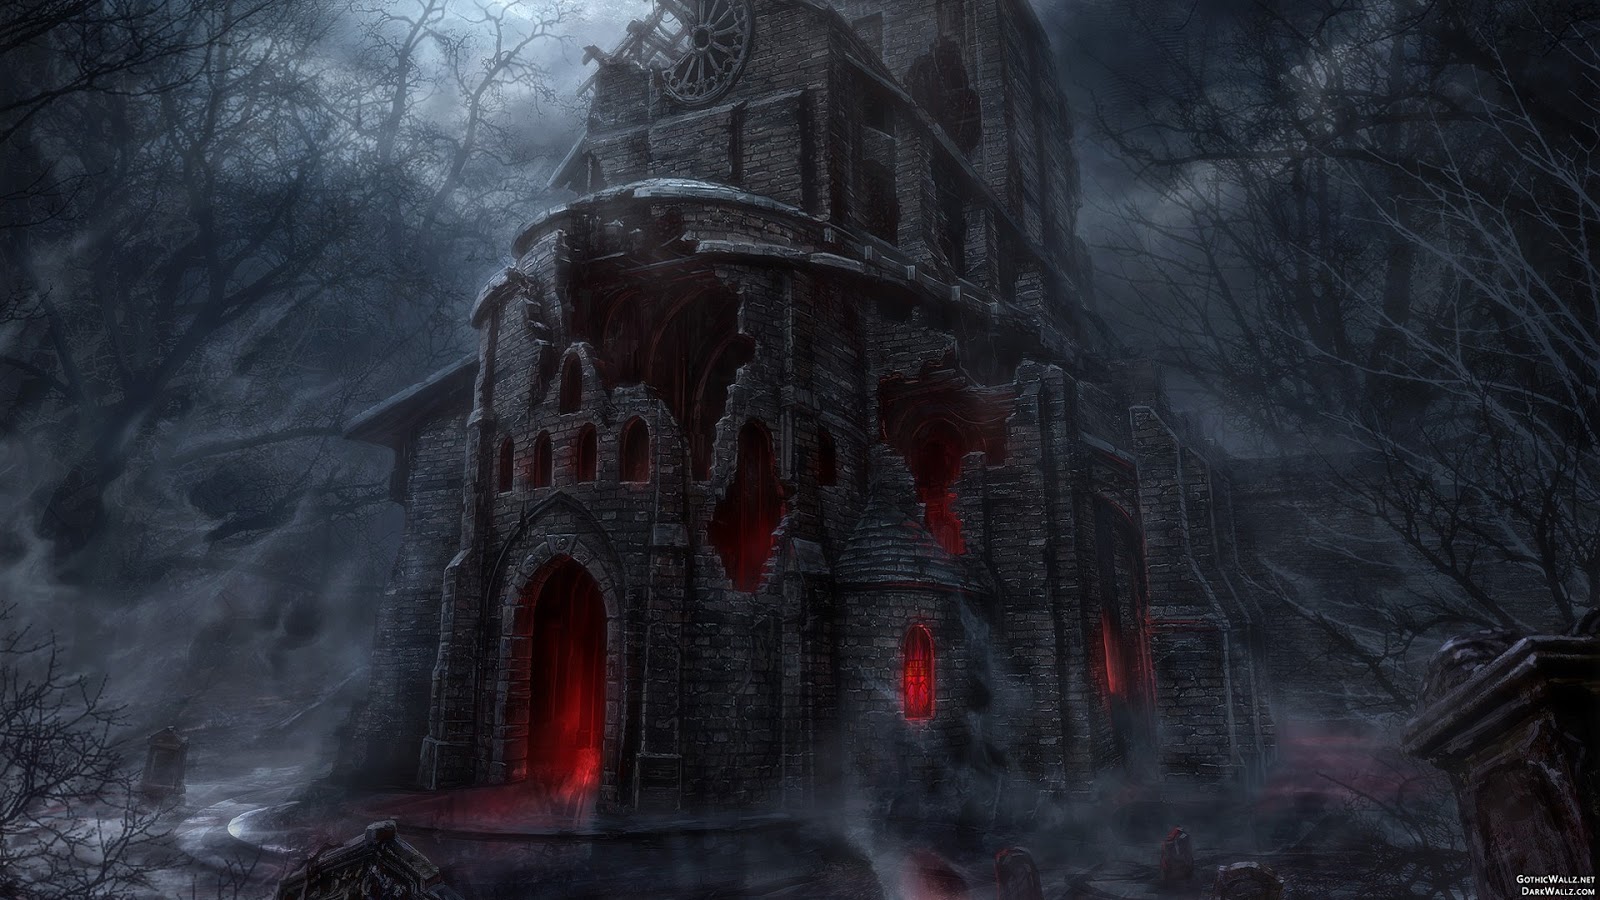  Dark halloween scary creepy gothic house | Dark Gothic Wallpaper Download